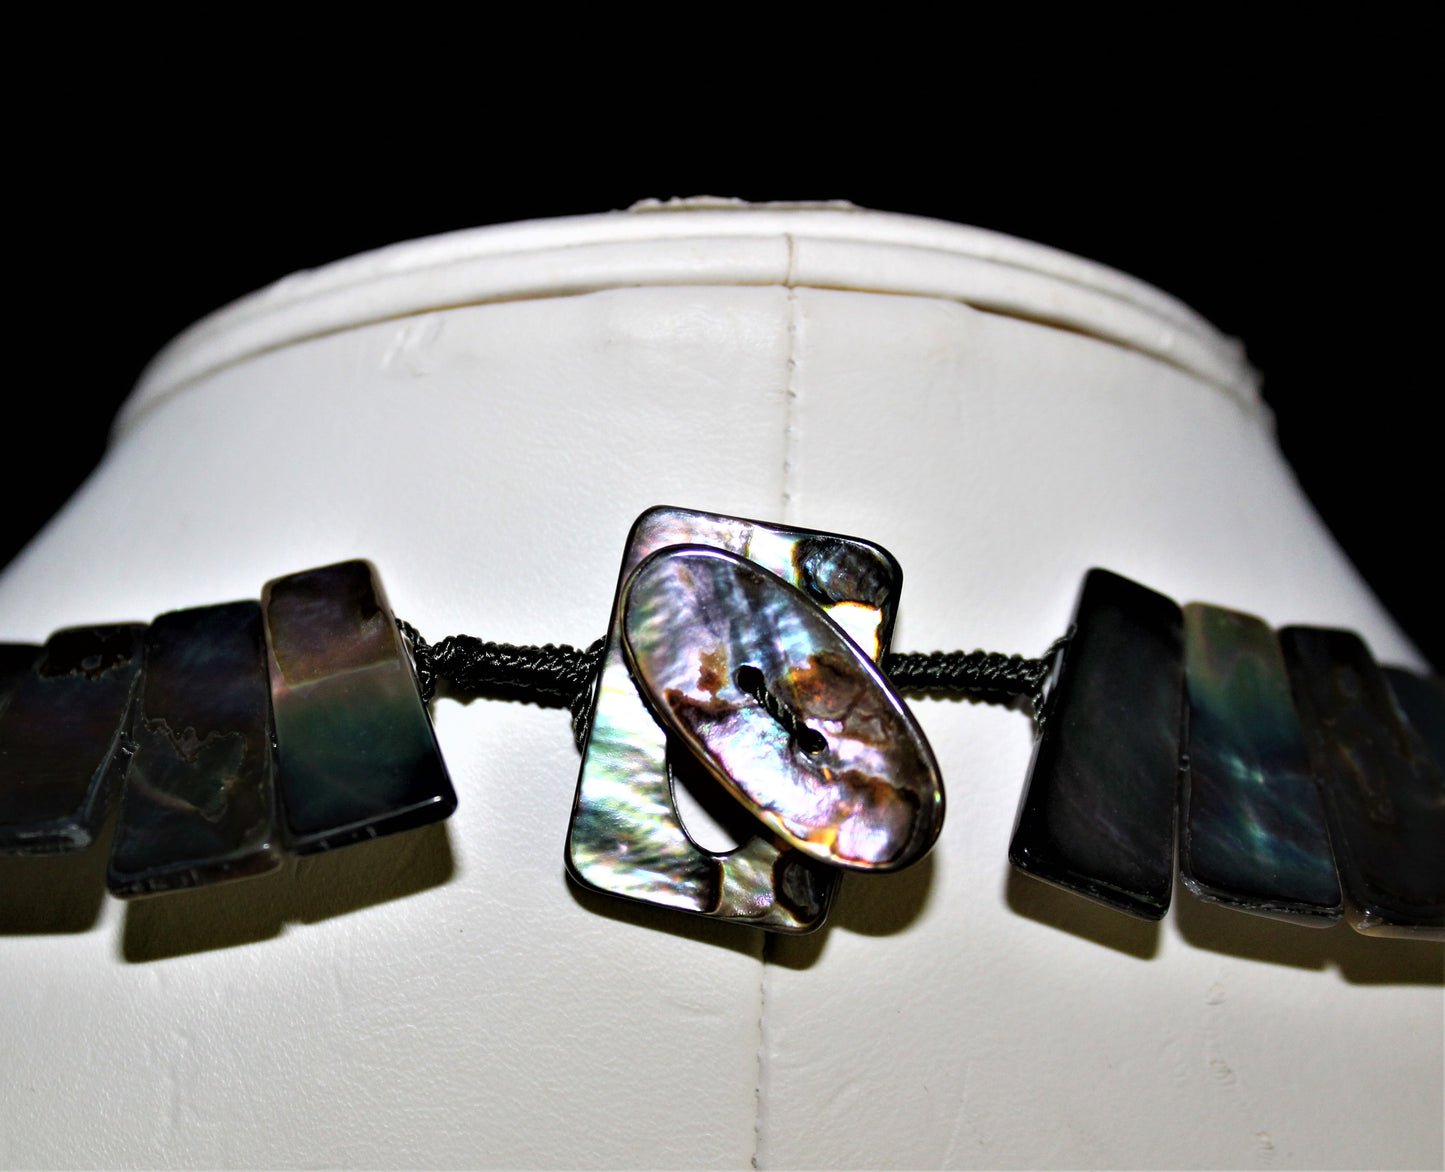 Abalone Bib Style Necklace